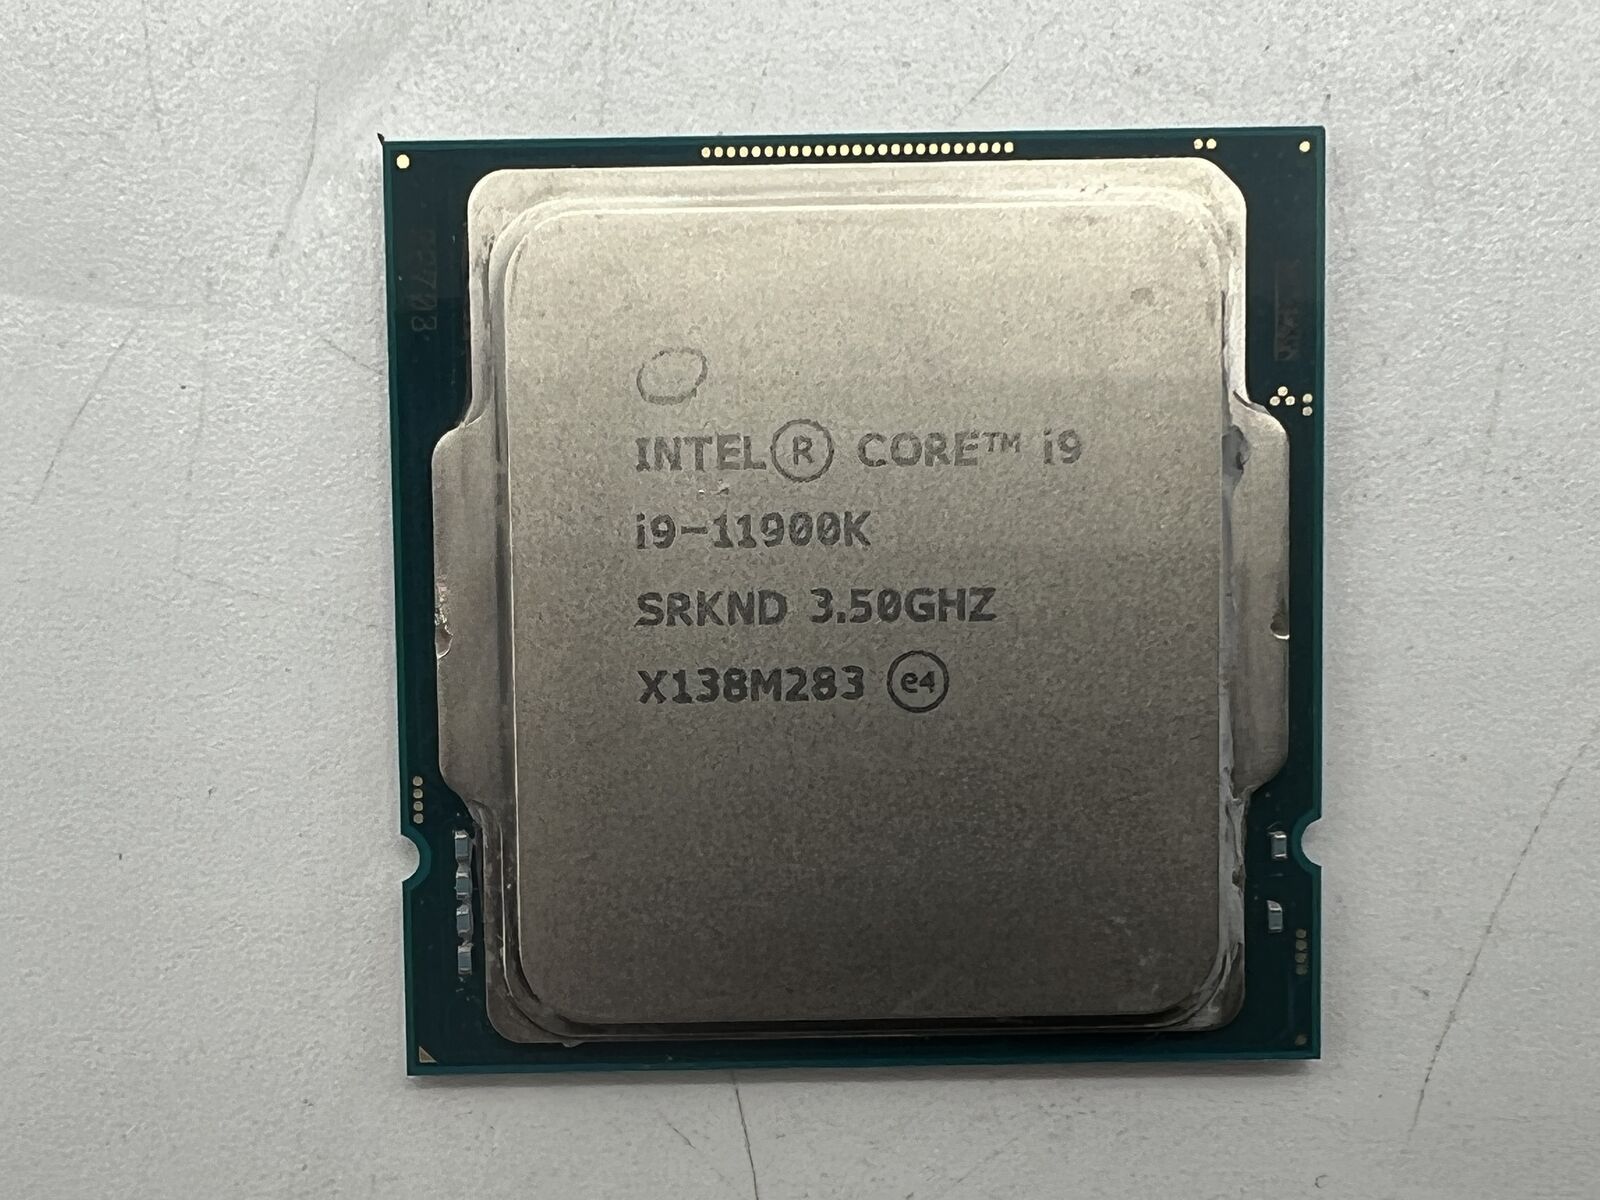 Intel Core i9-11900K 8 Core Socket LGA1200 3.50GHz Desktop Processor Used	